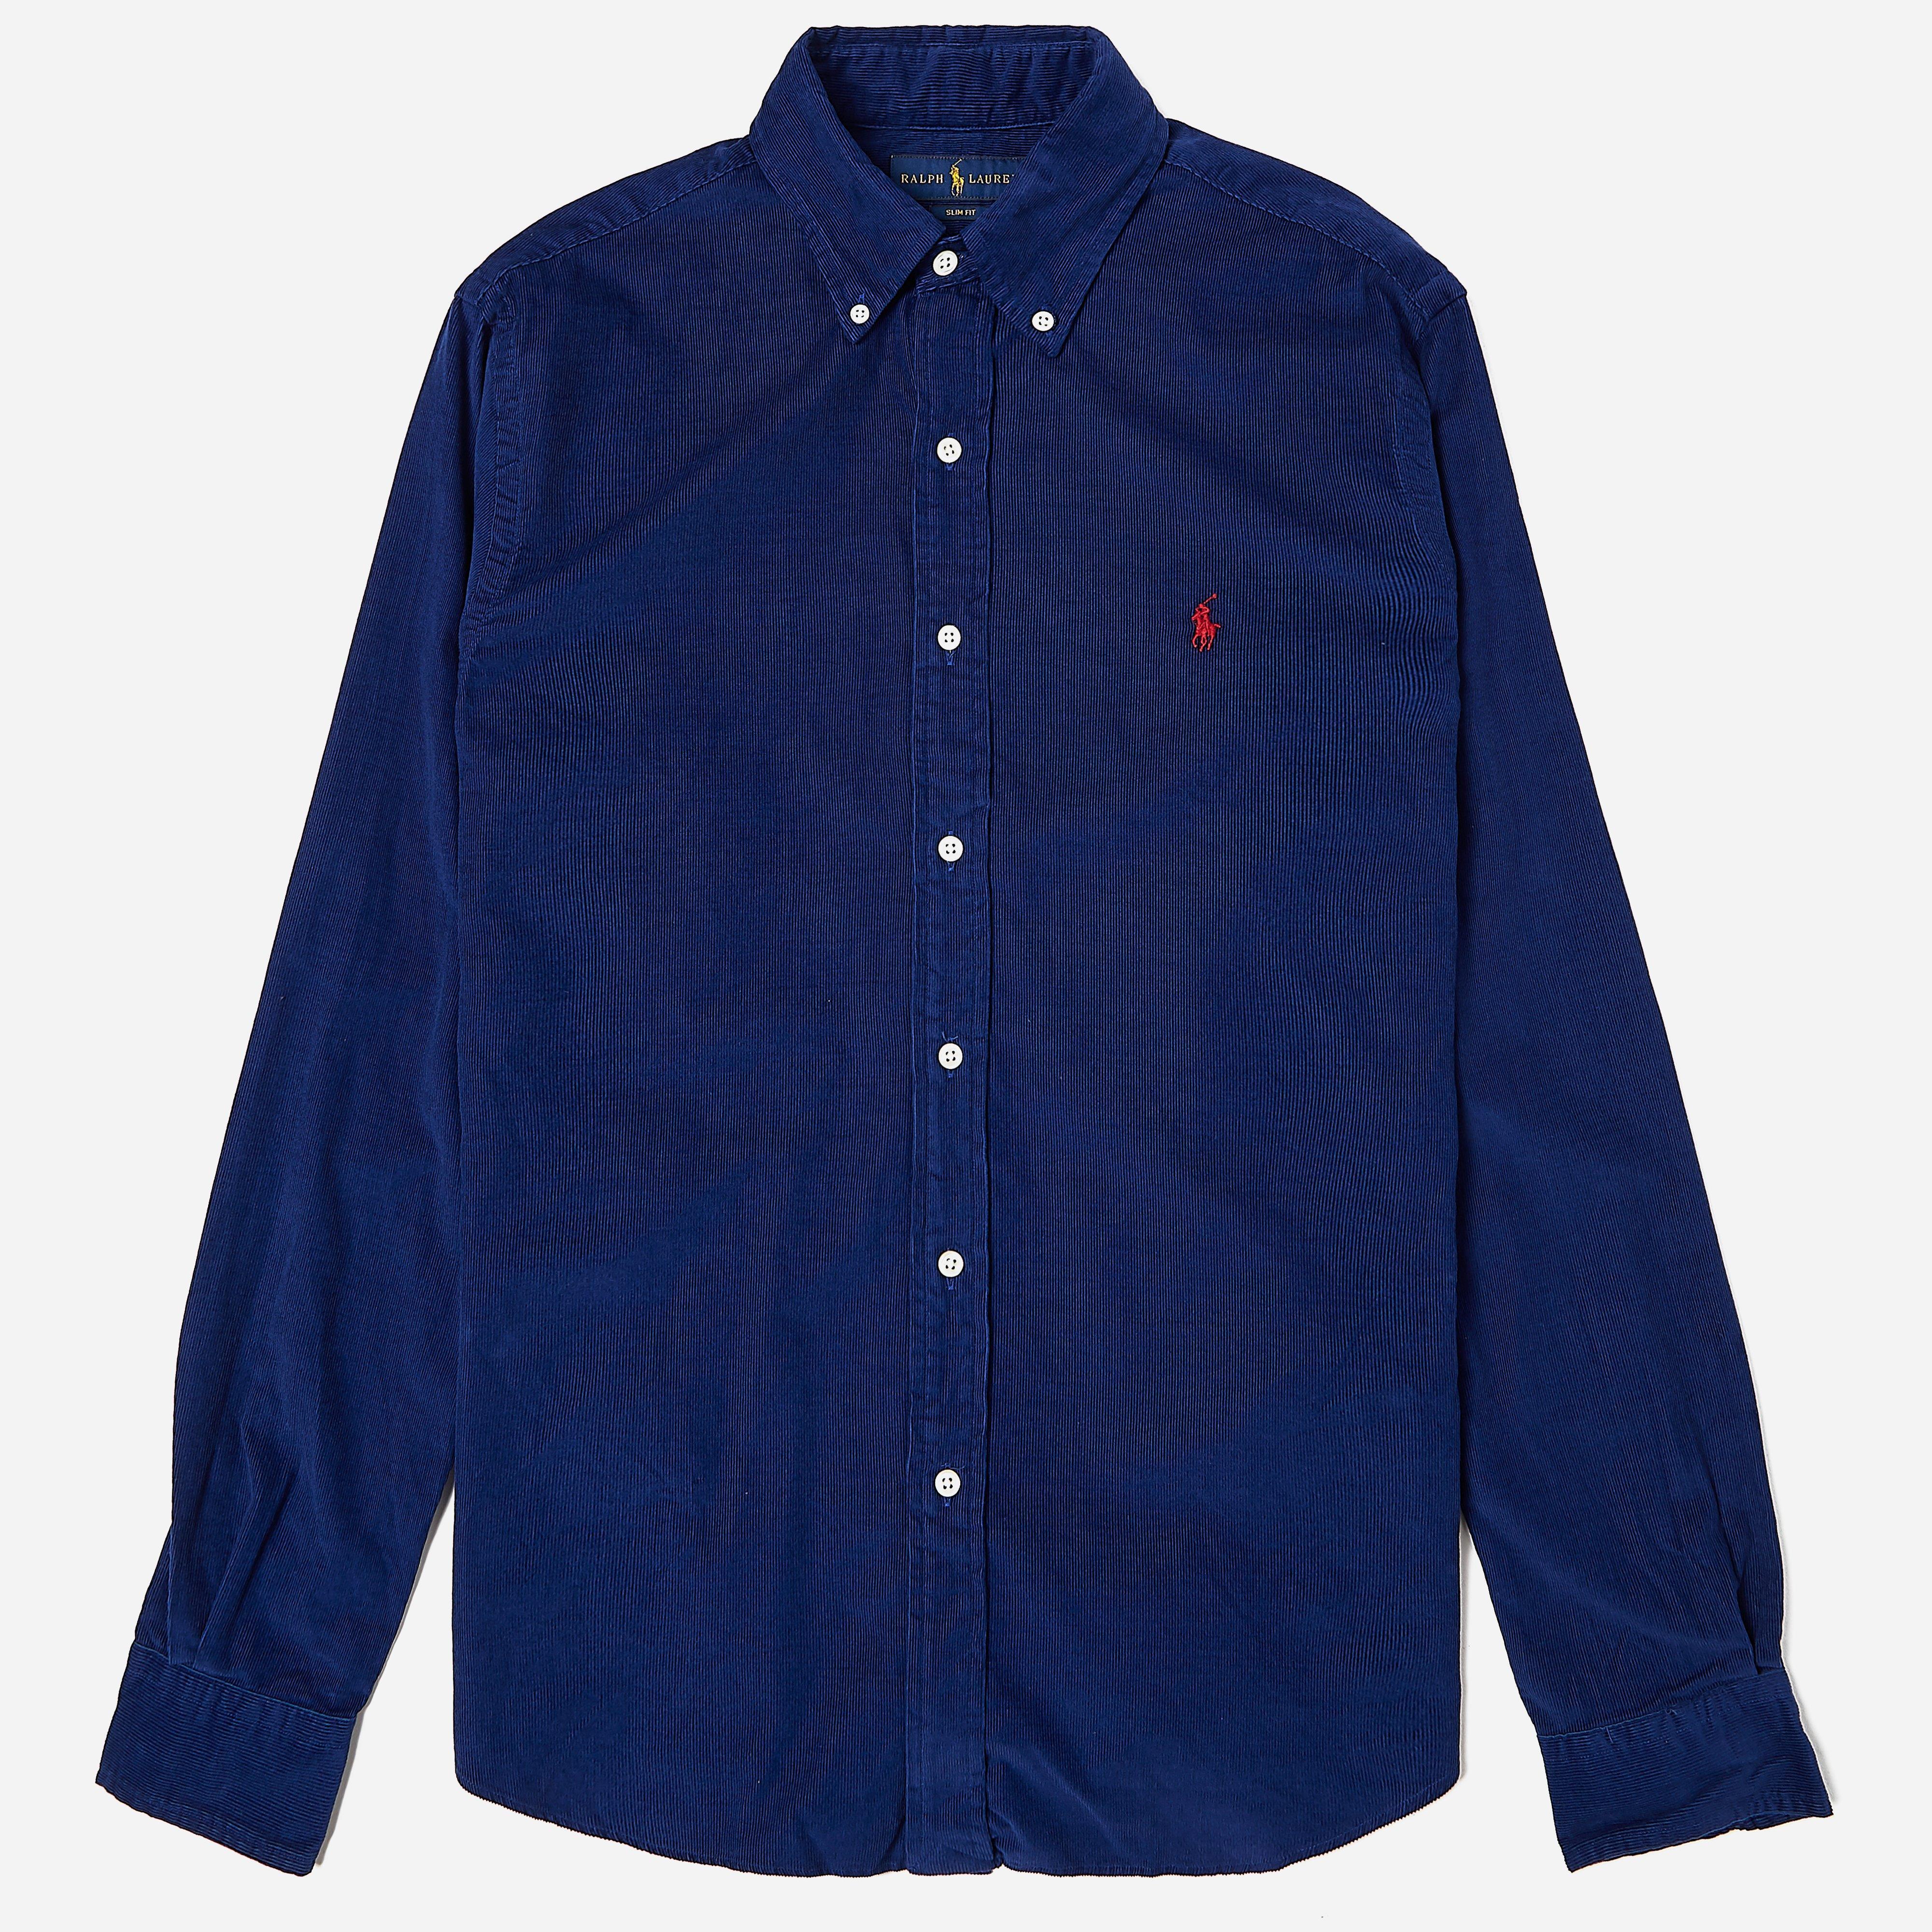 Lyst - Polo Ralph Lauren Corduroy Sport Shirt in Blue for Men